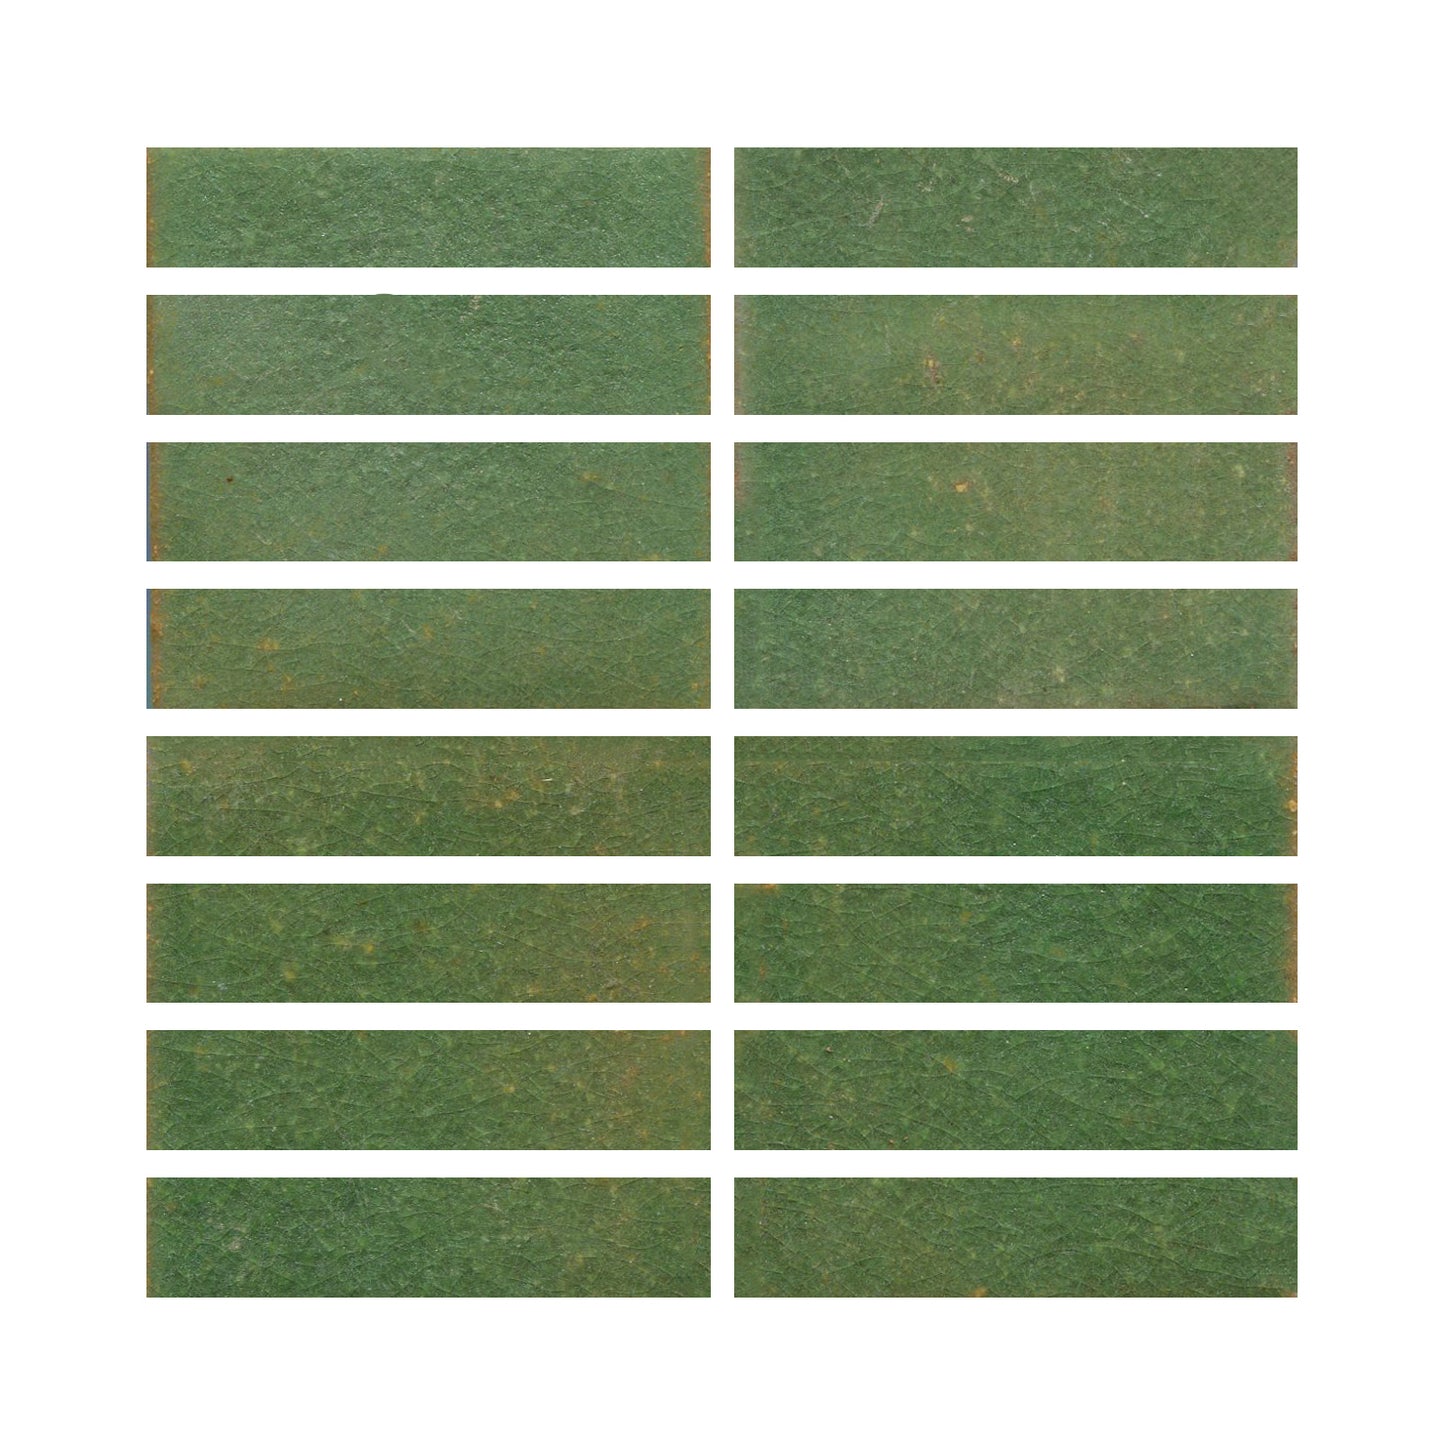 Avocado green 1x4 field tile